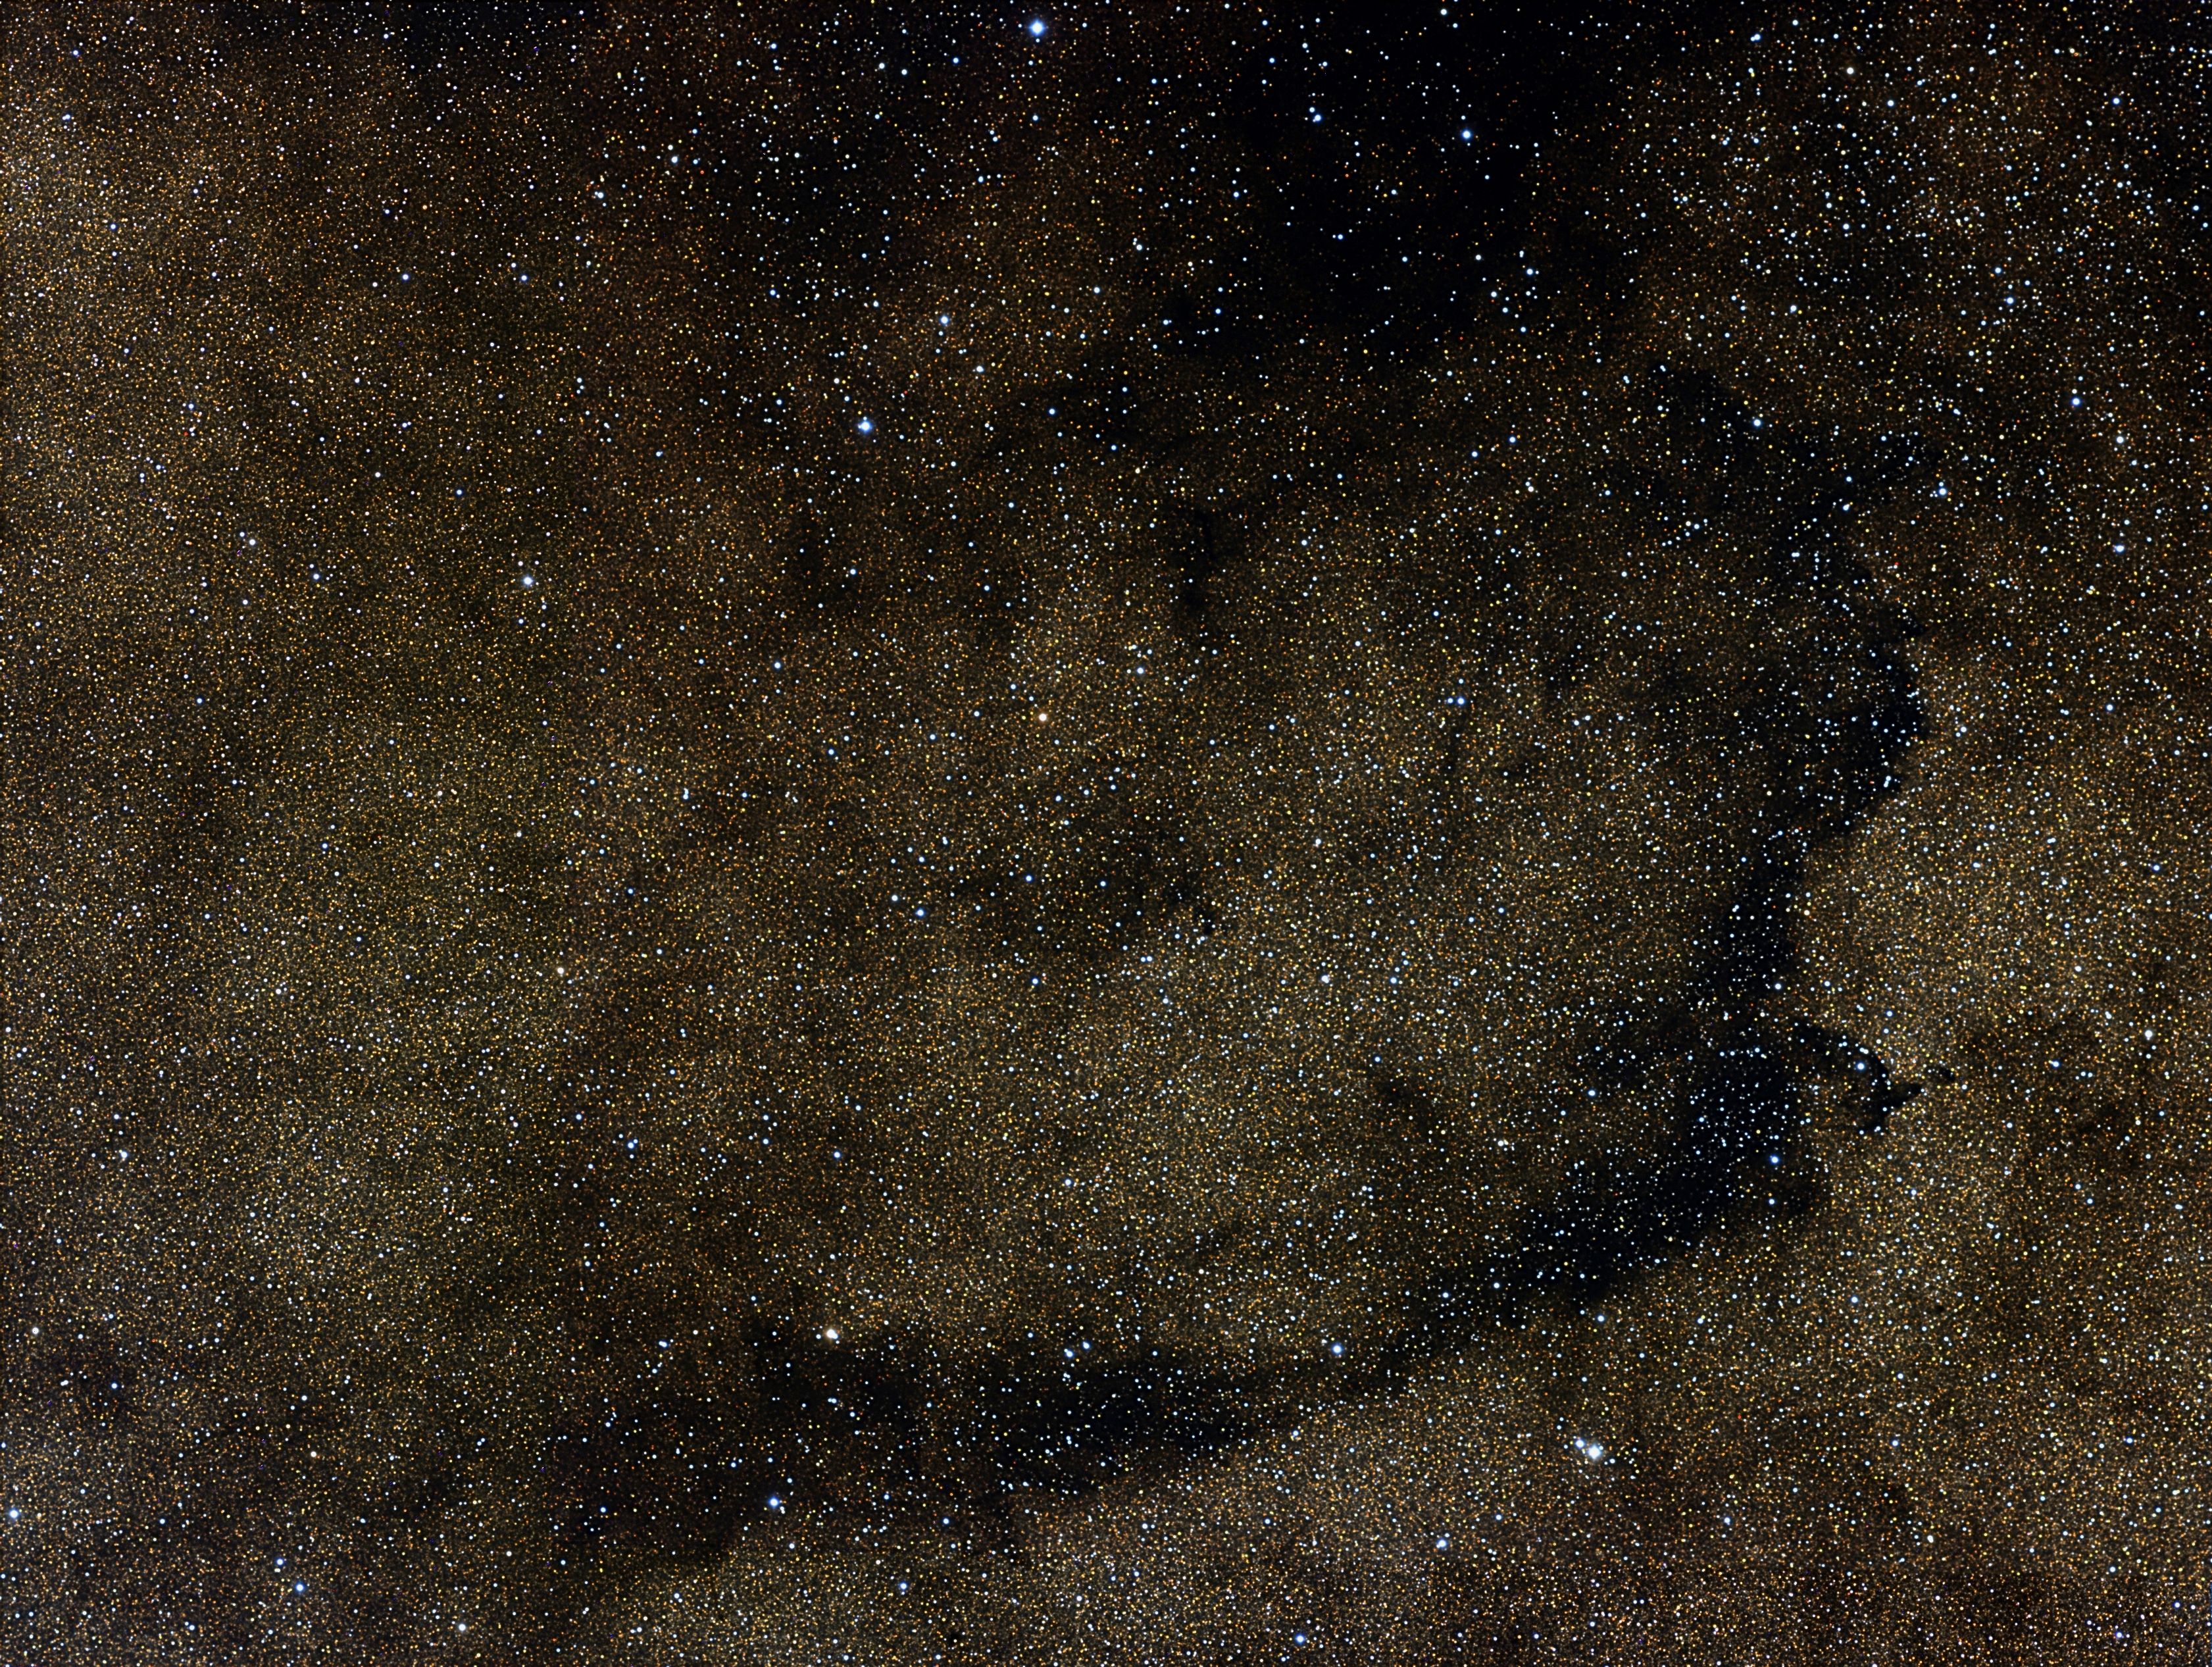 B283 - The Lizard nebula (reprocessed)